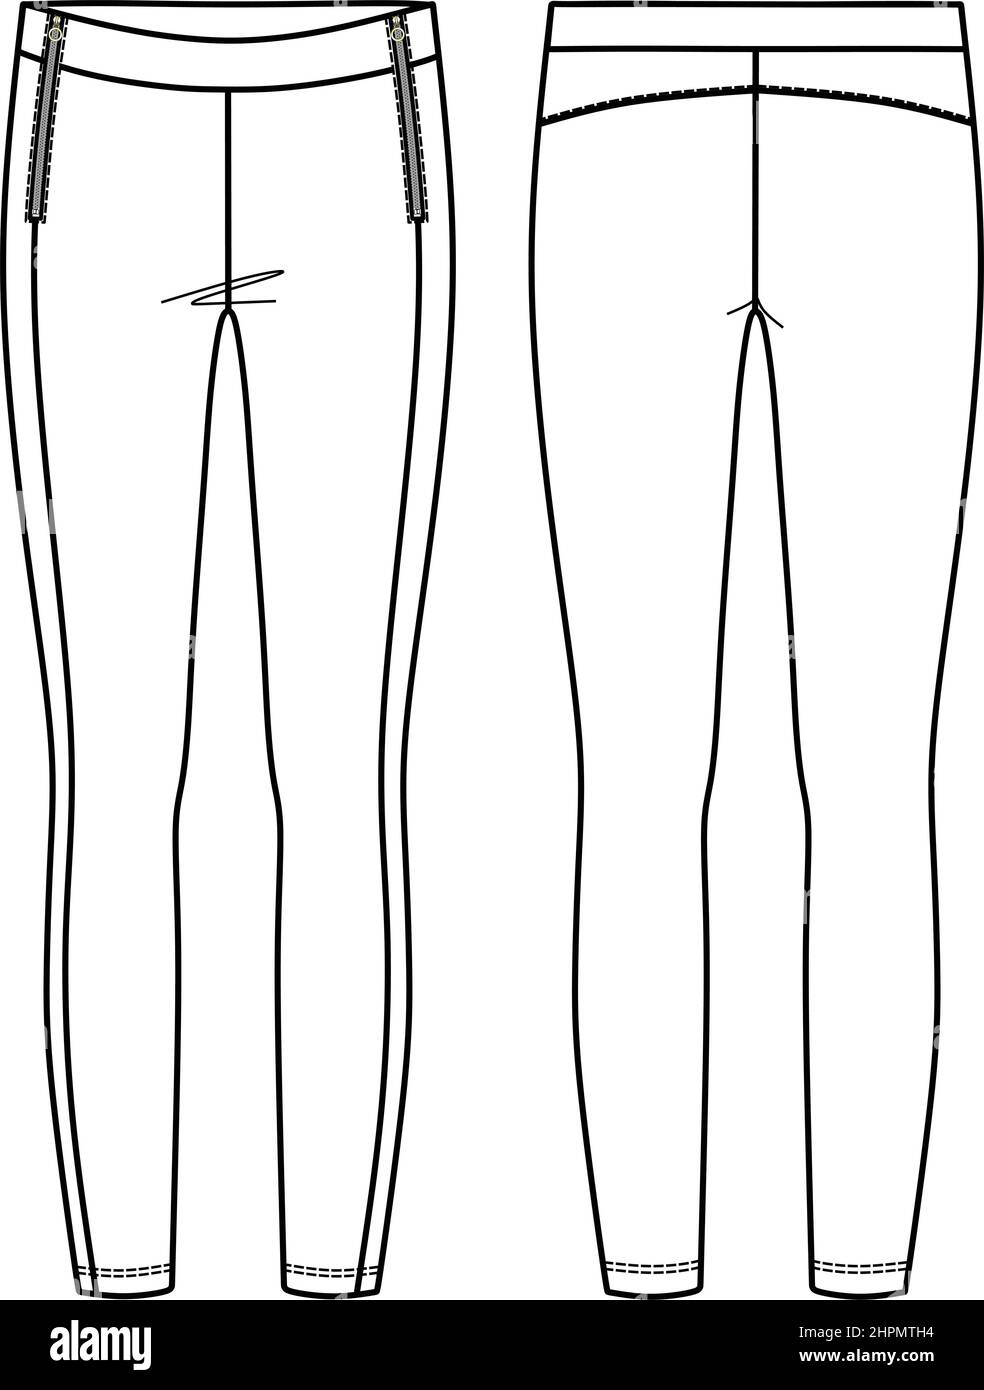 V5 Knit Leggings Free Illustrator Fashion Technical Drawing